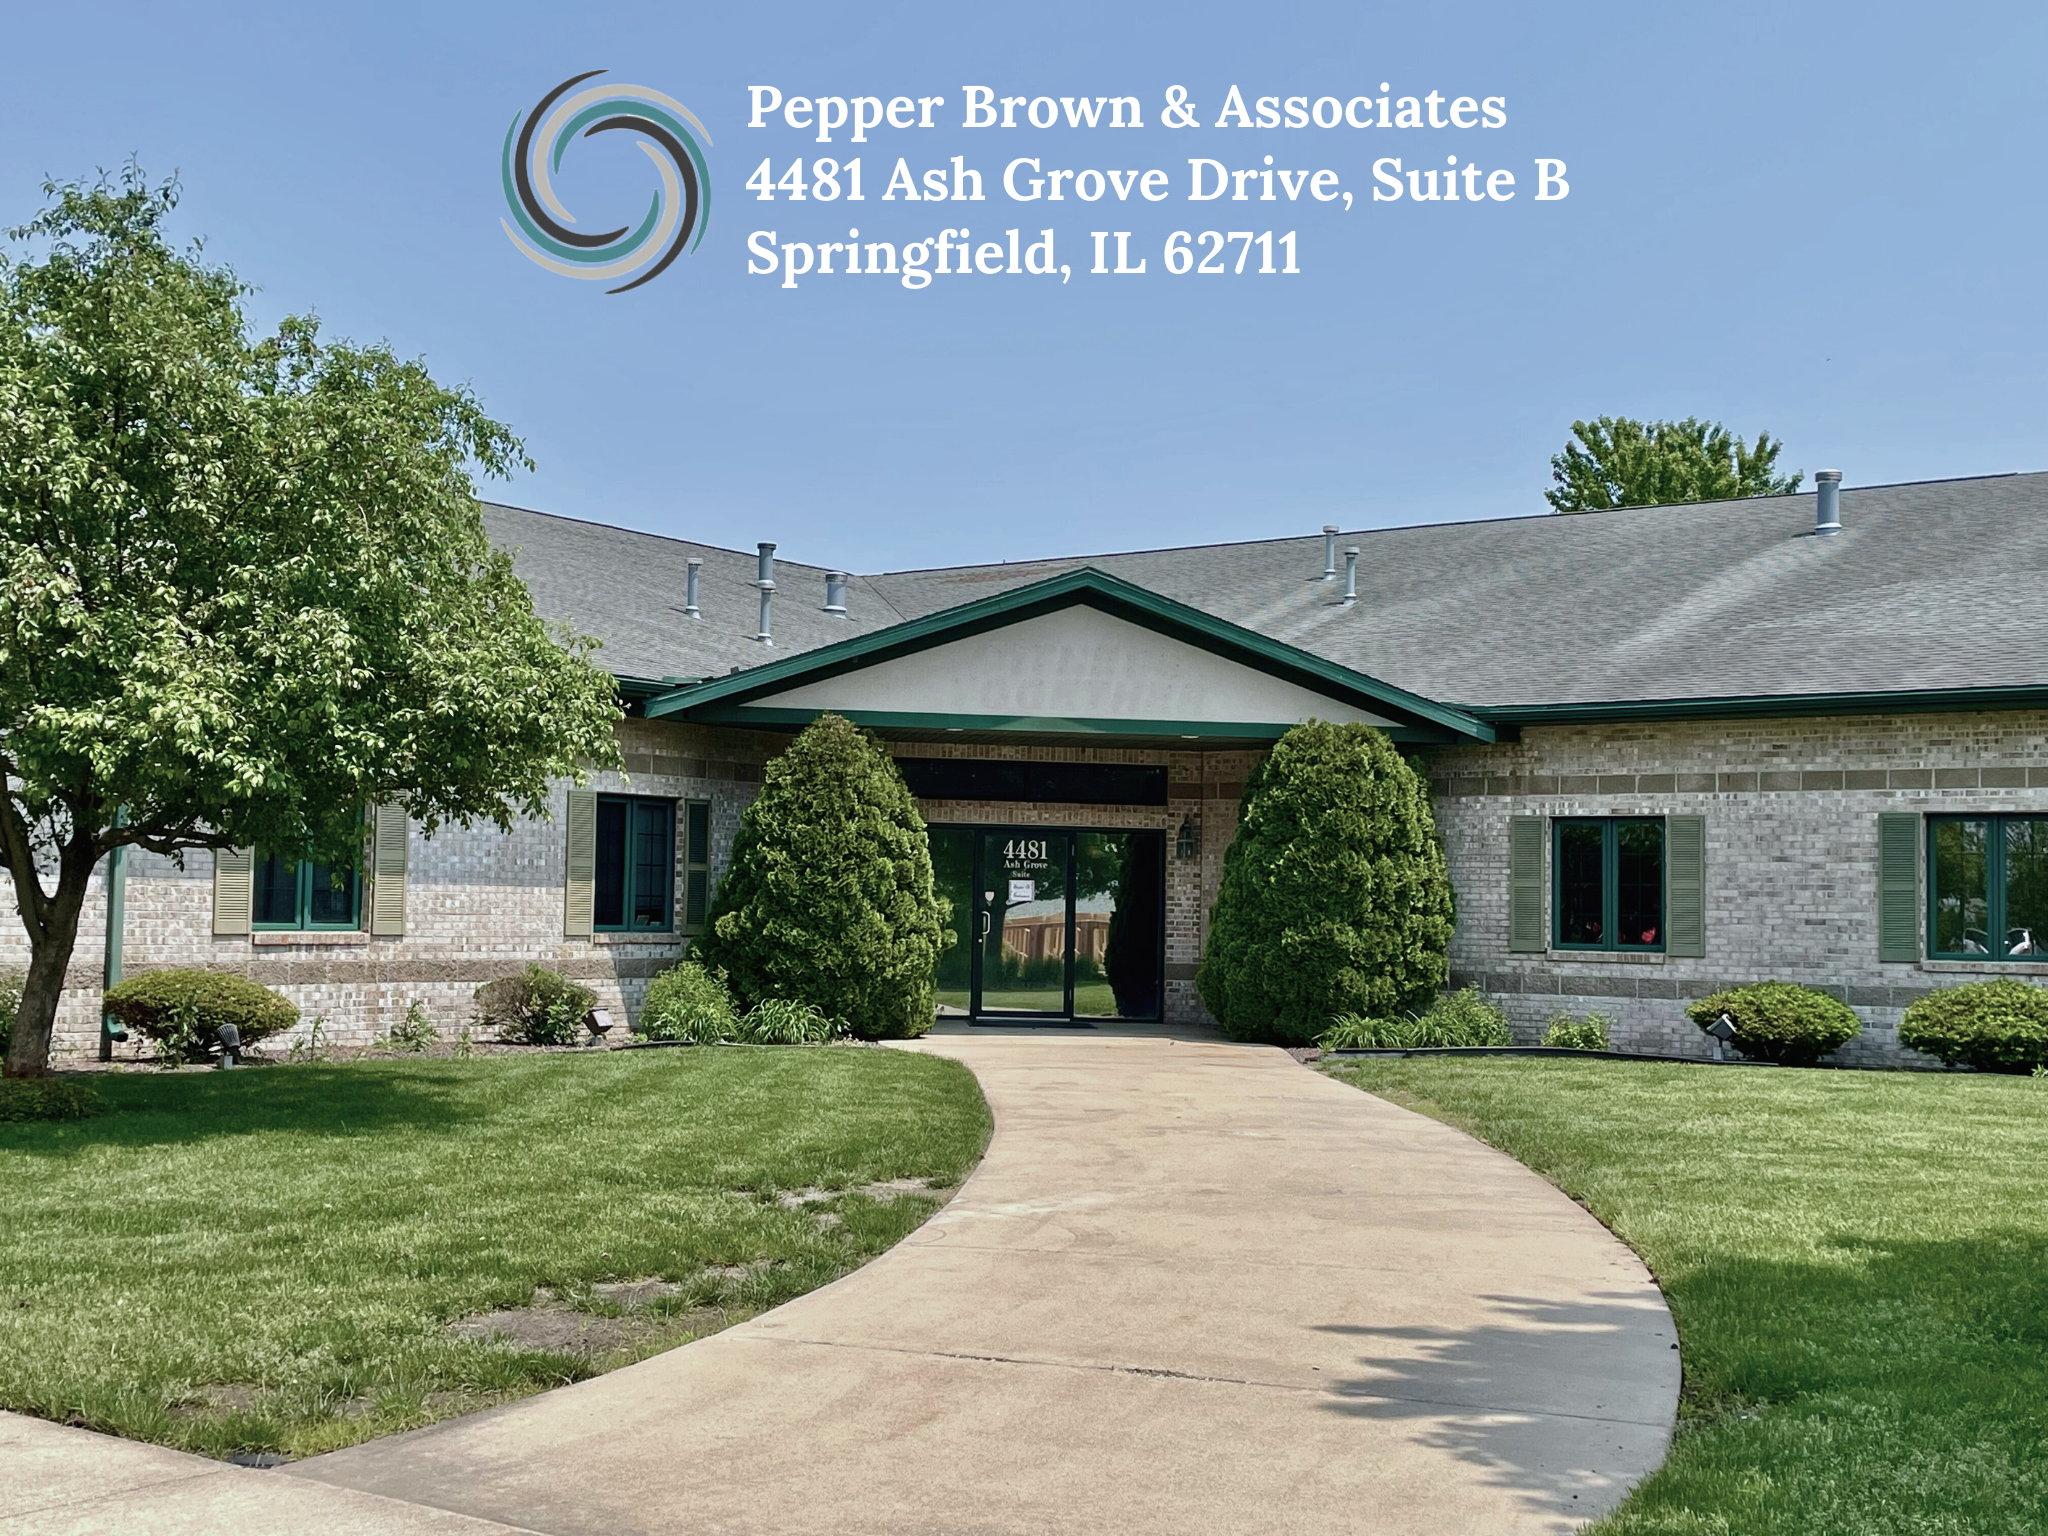 Pepper Brown & Associates | 4481 Ash Grove Drive, Suite B | Springfield, IL 62711